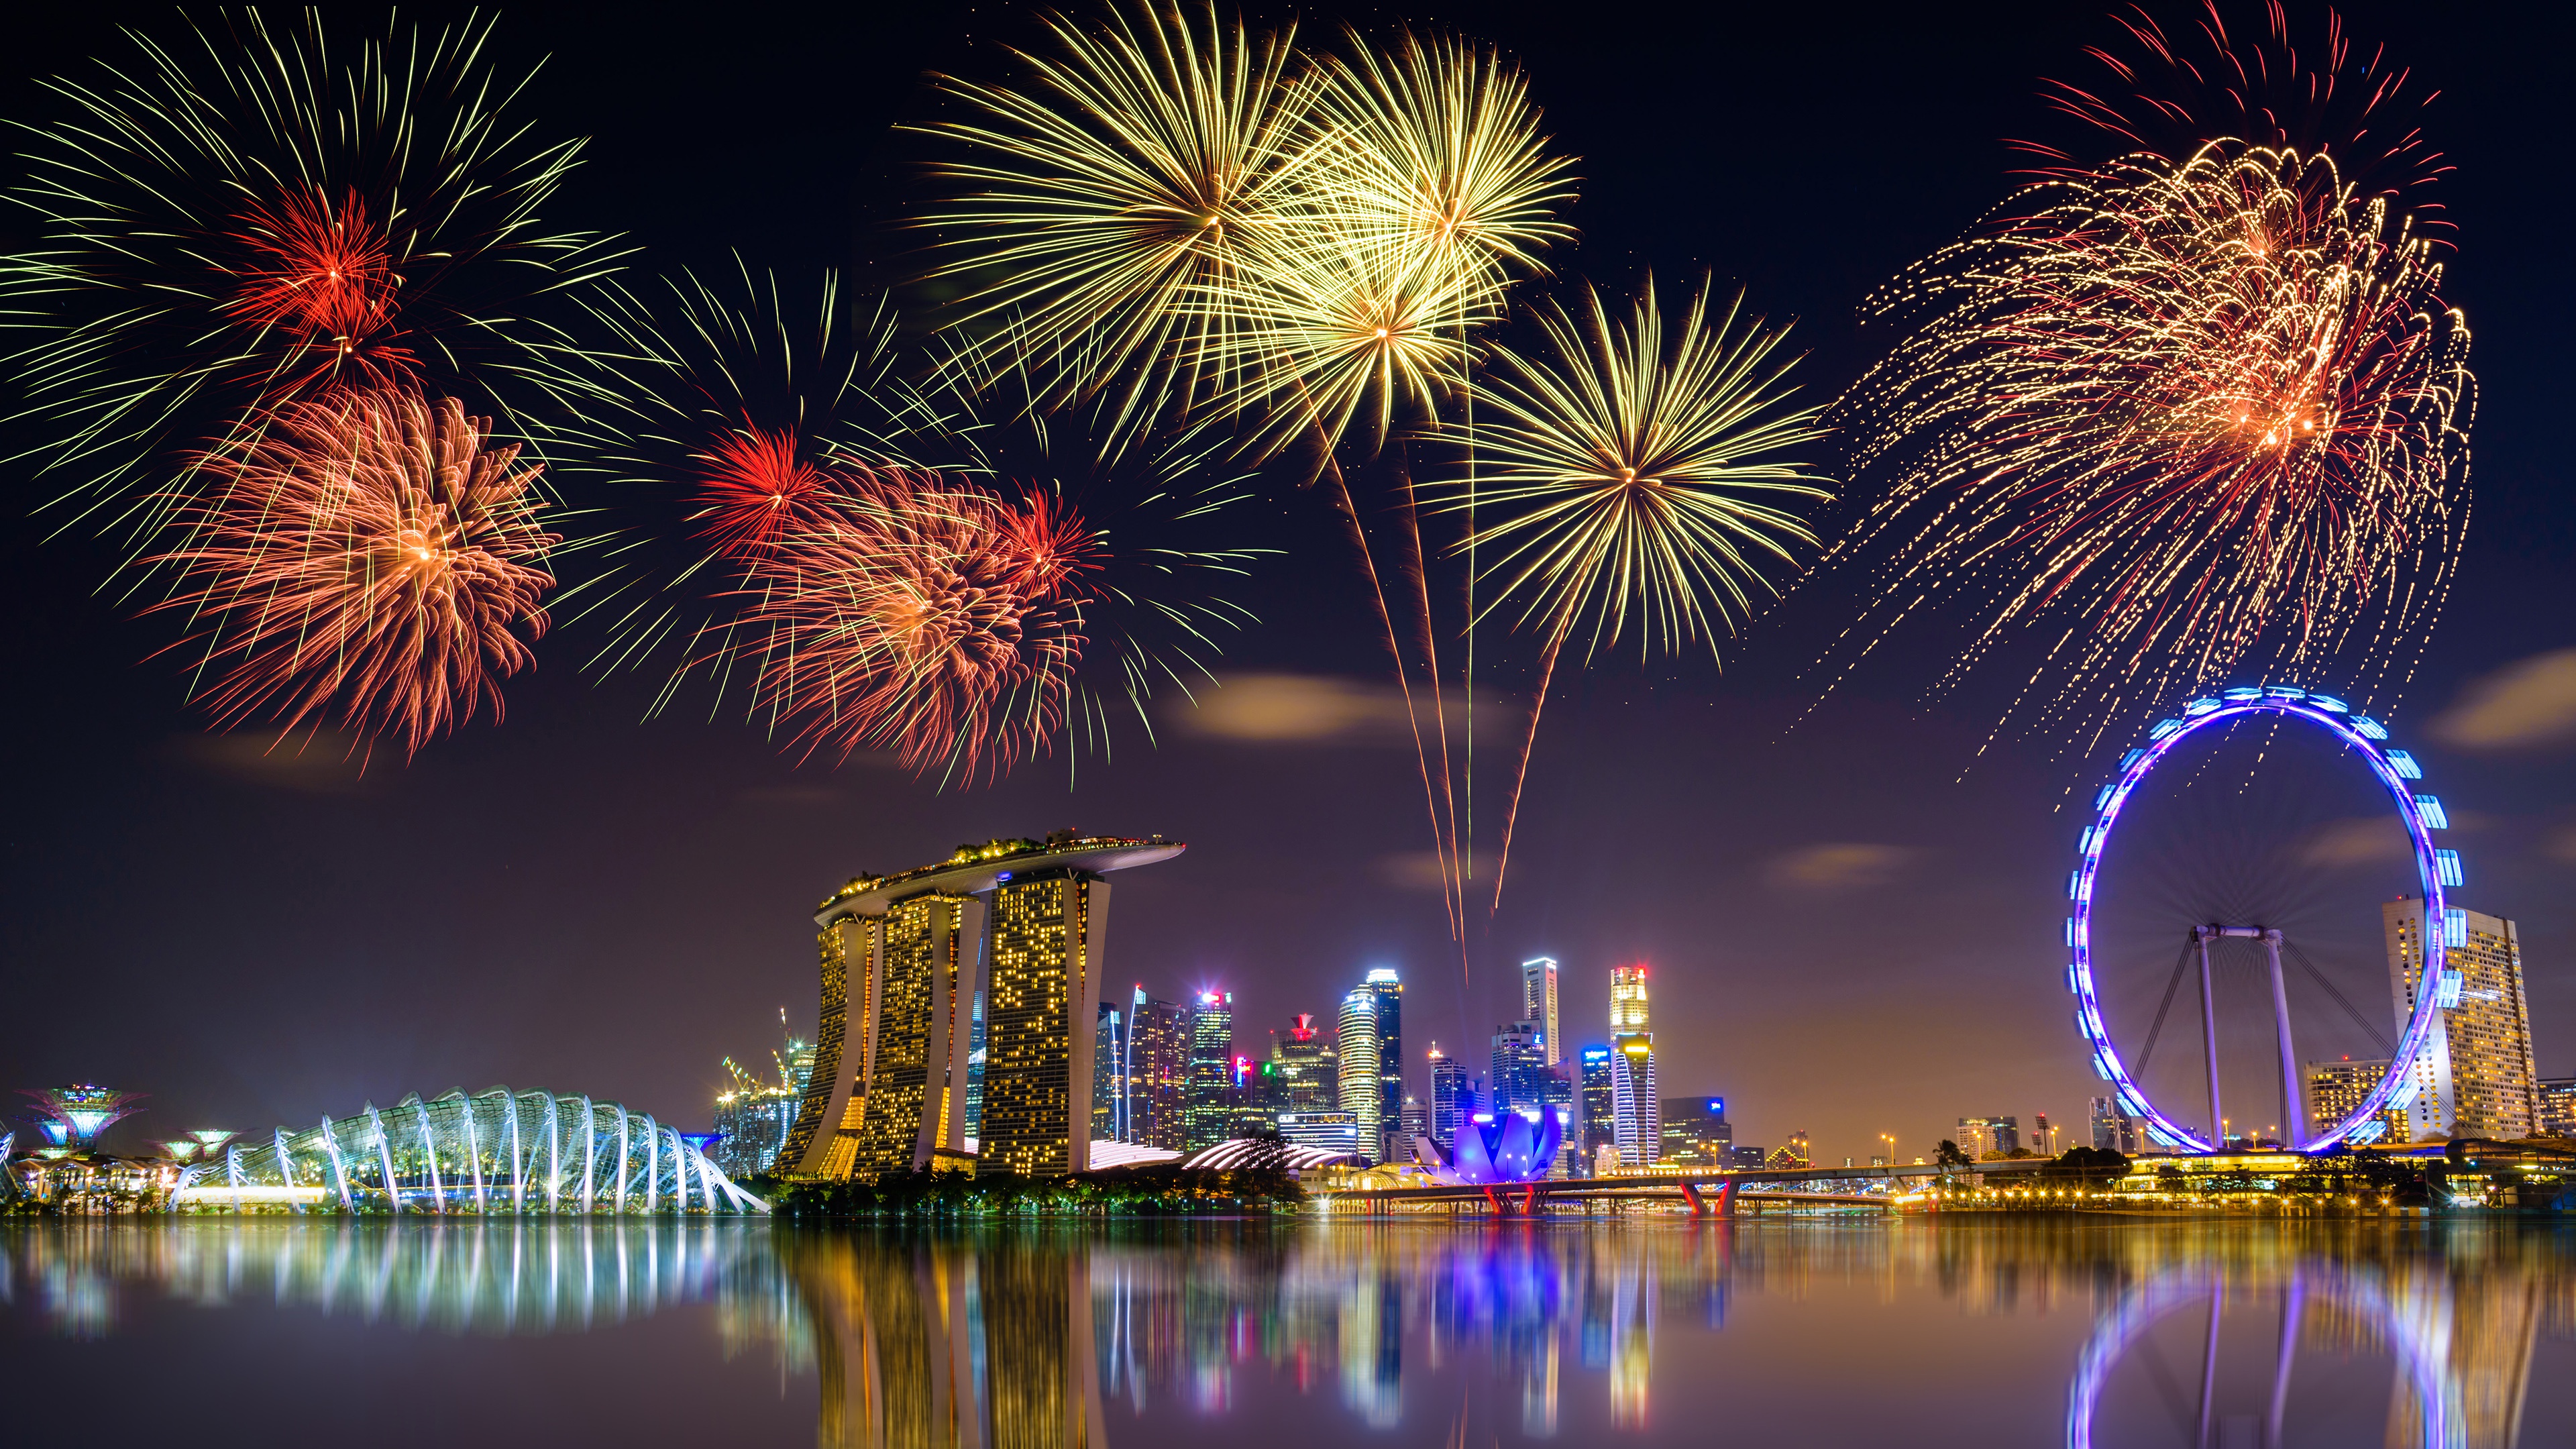 singapore, photography, fireworks, architecture, building, city, ferris wheel, marina bay sands, night, reflection